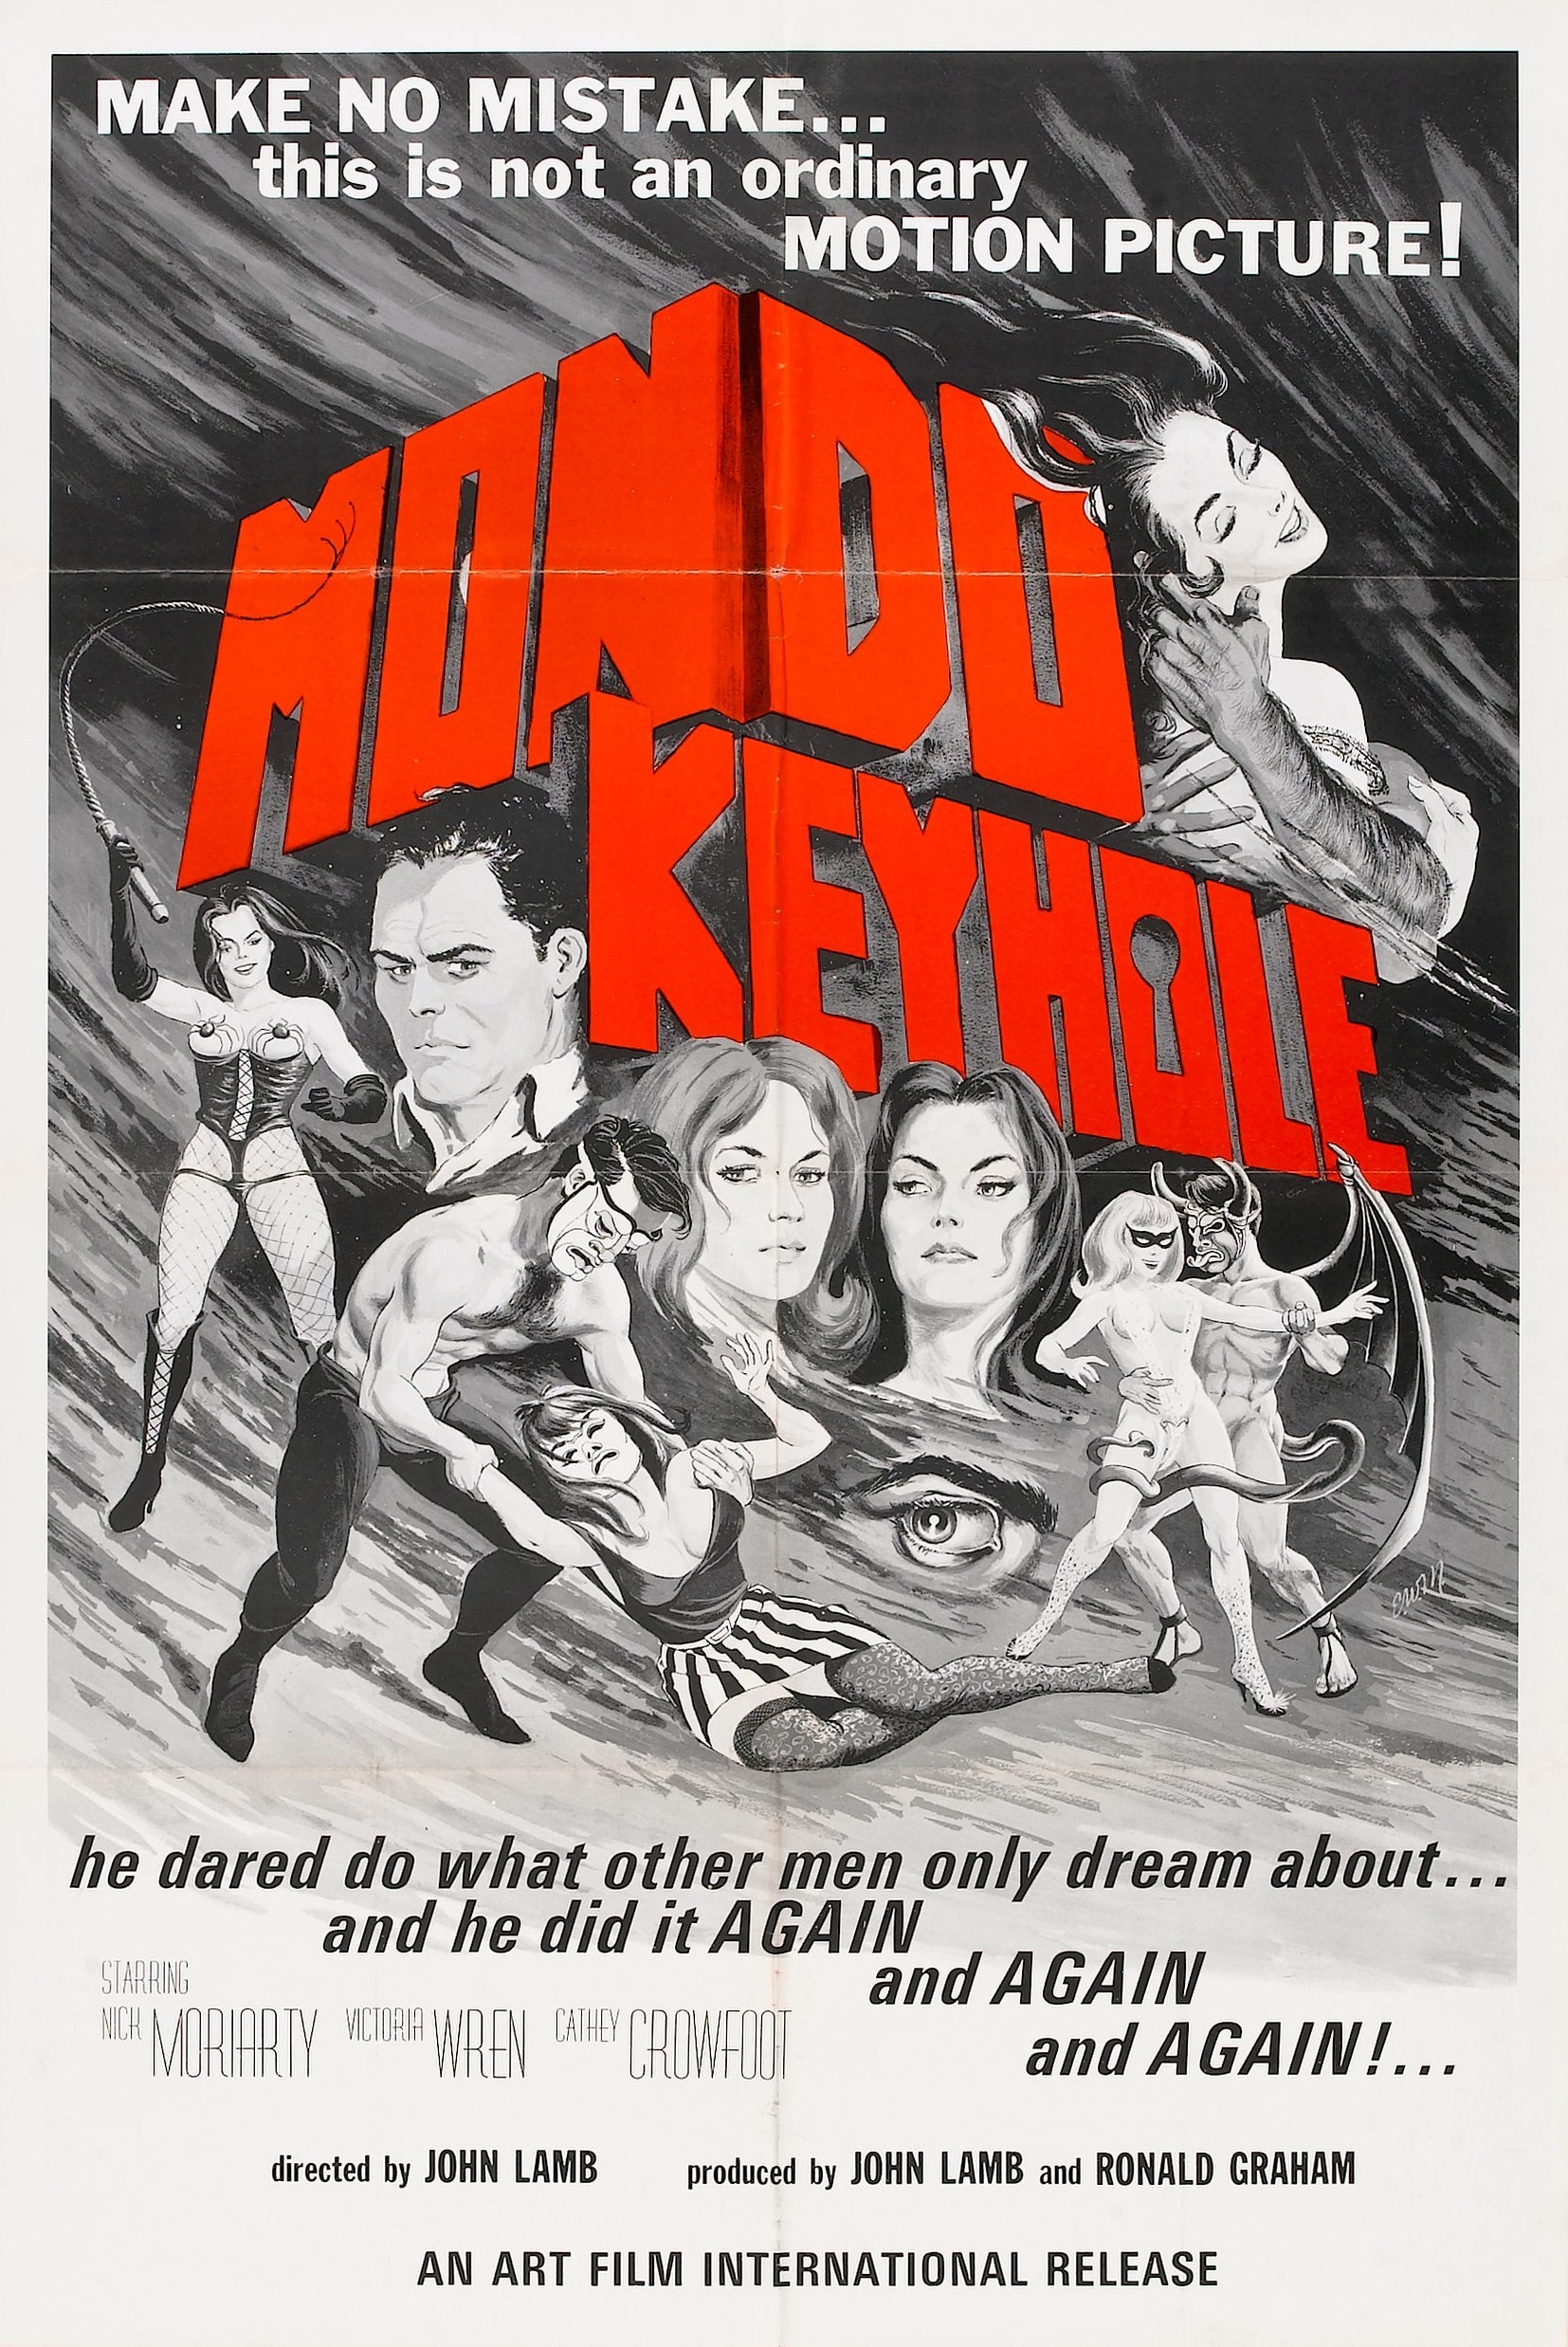 Mondo Keyhole (1966) Screenshot 3 